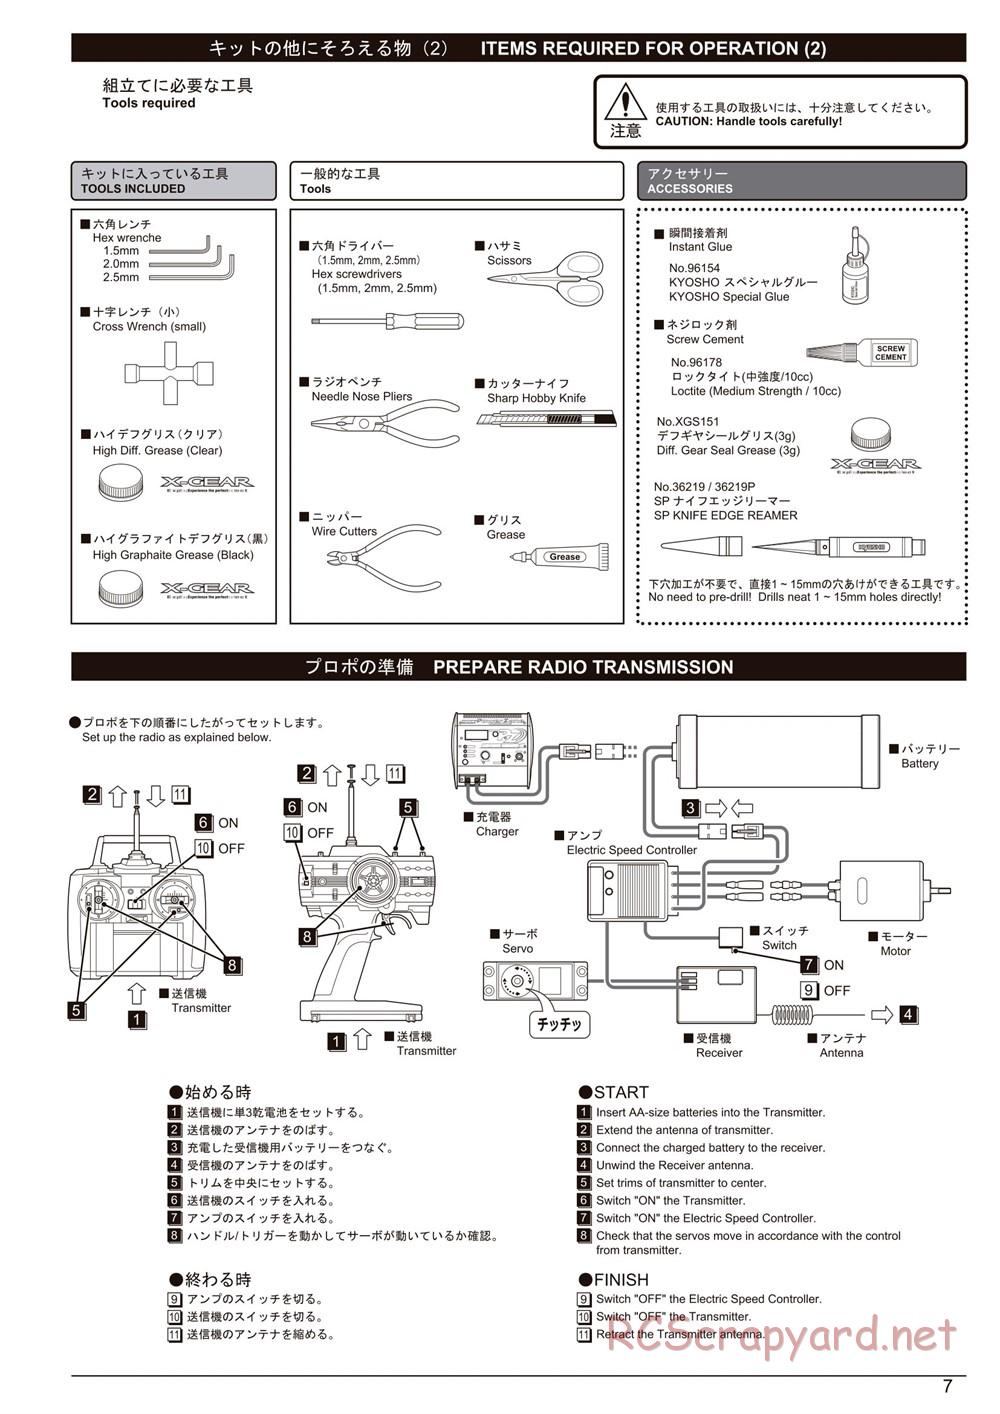 Kyosho - Lazer ZX6.6 - Manual - Page 7